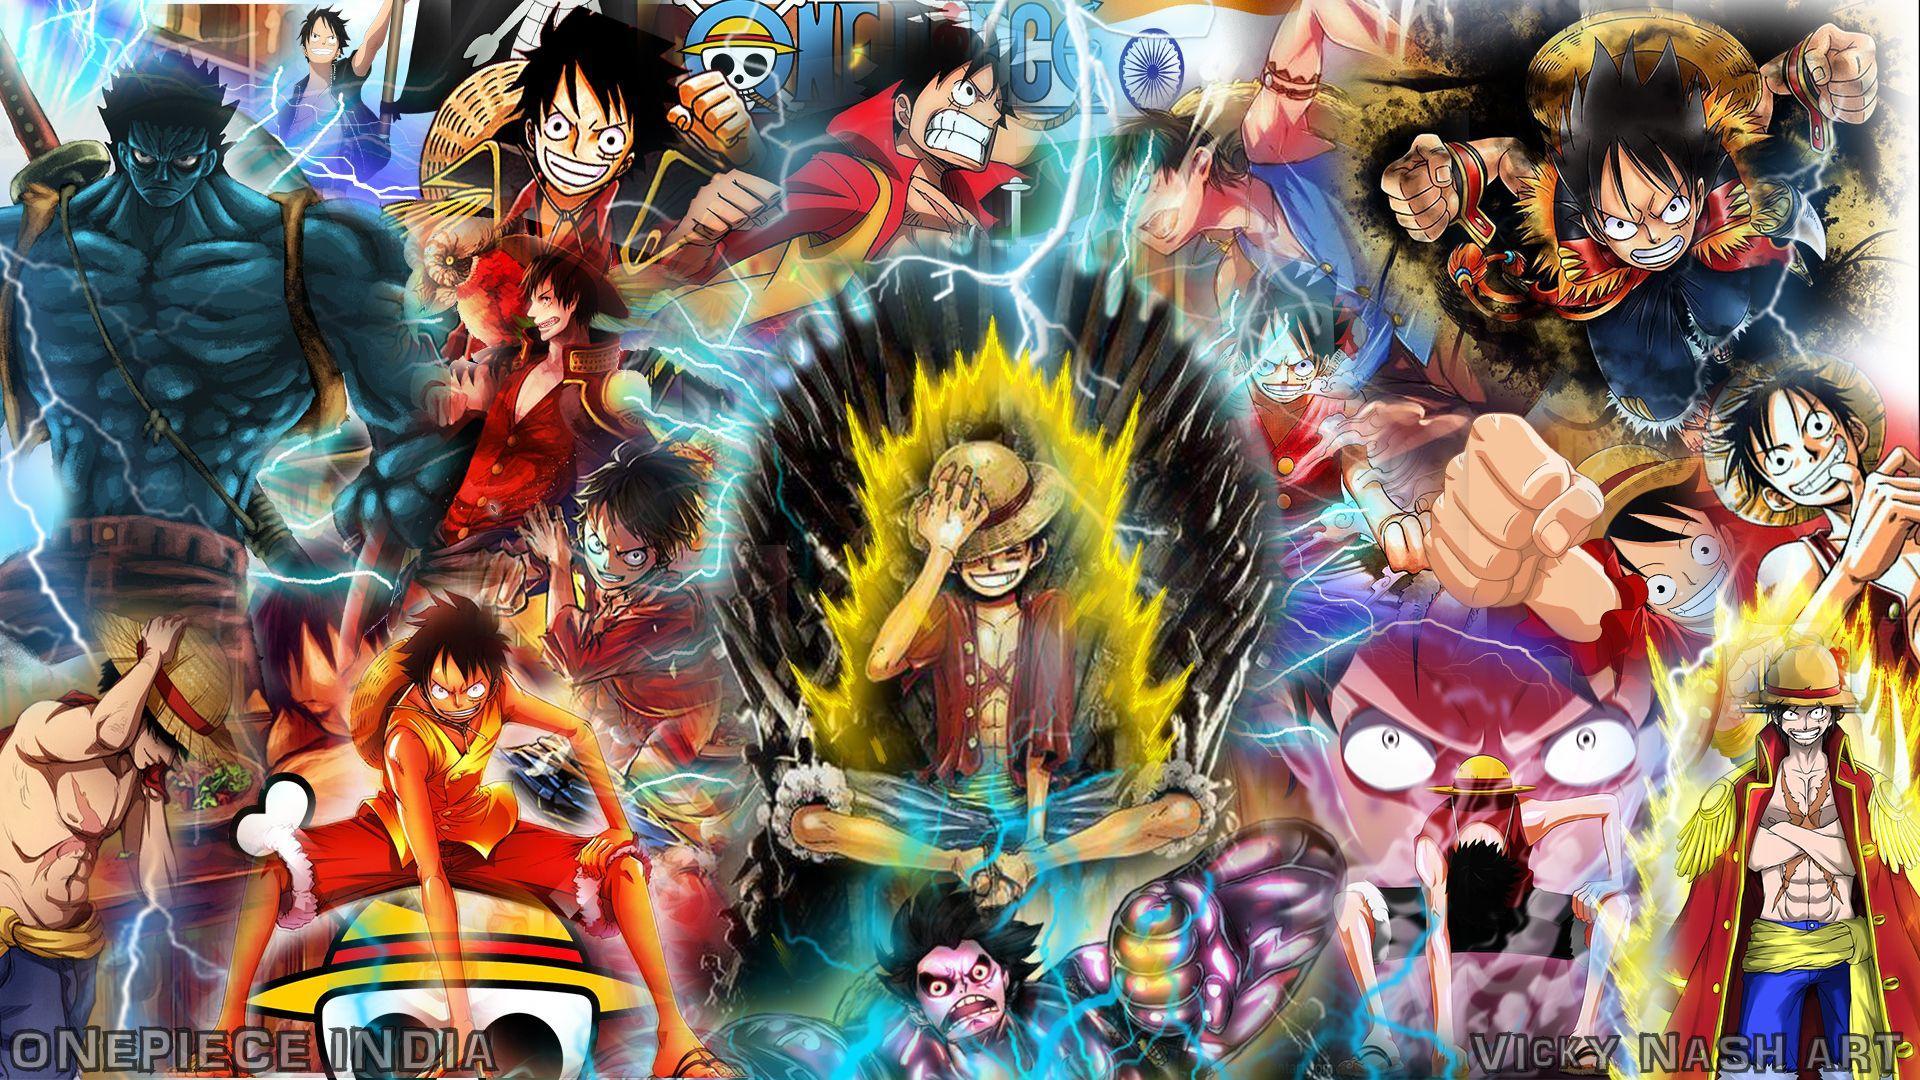 One Piece Vs Naruto Wallpapers Top Free One Piece Vs Naruto